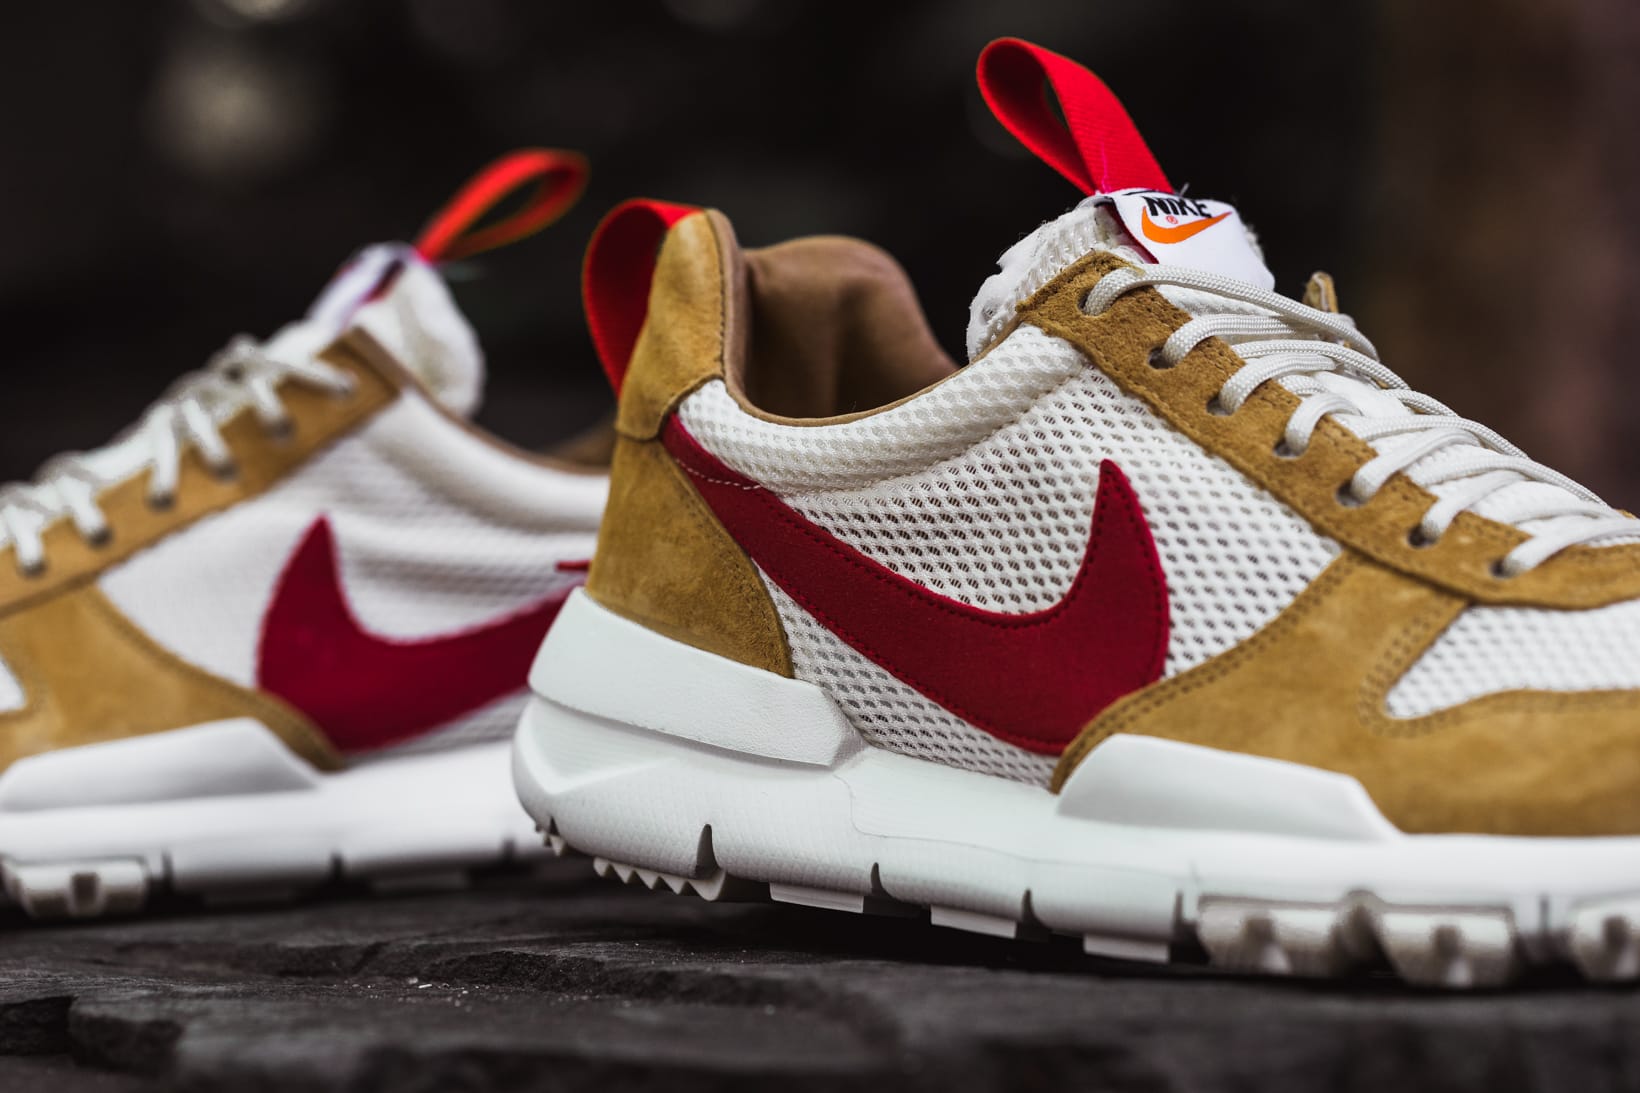 Tom Sachs x Nike Mars Yard Shoe 2.0 Closer Look | Hypebeast